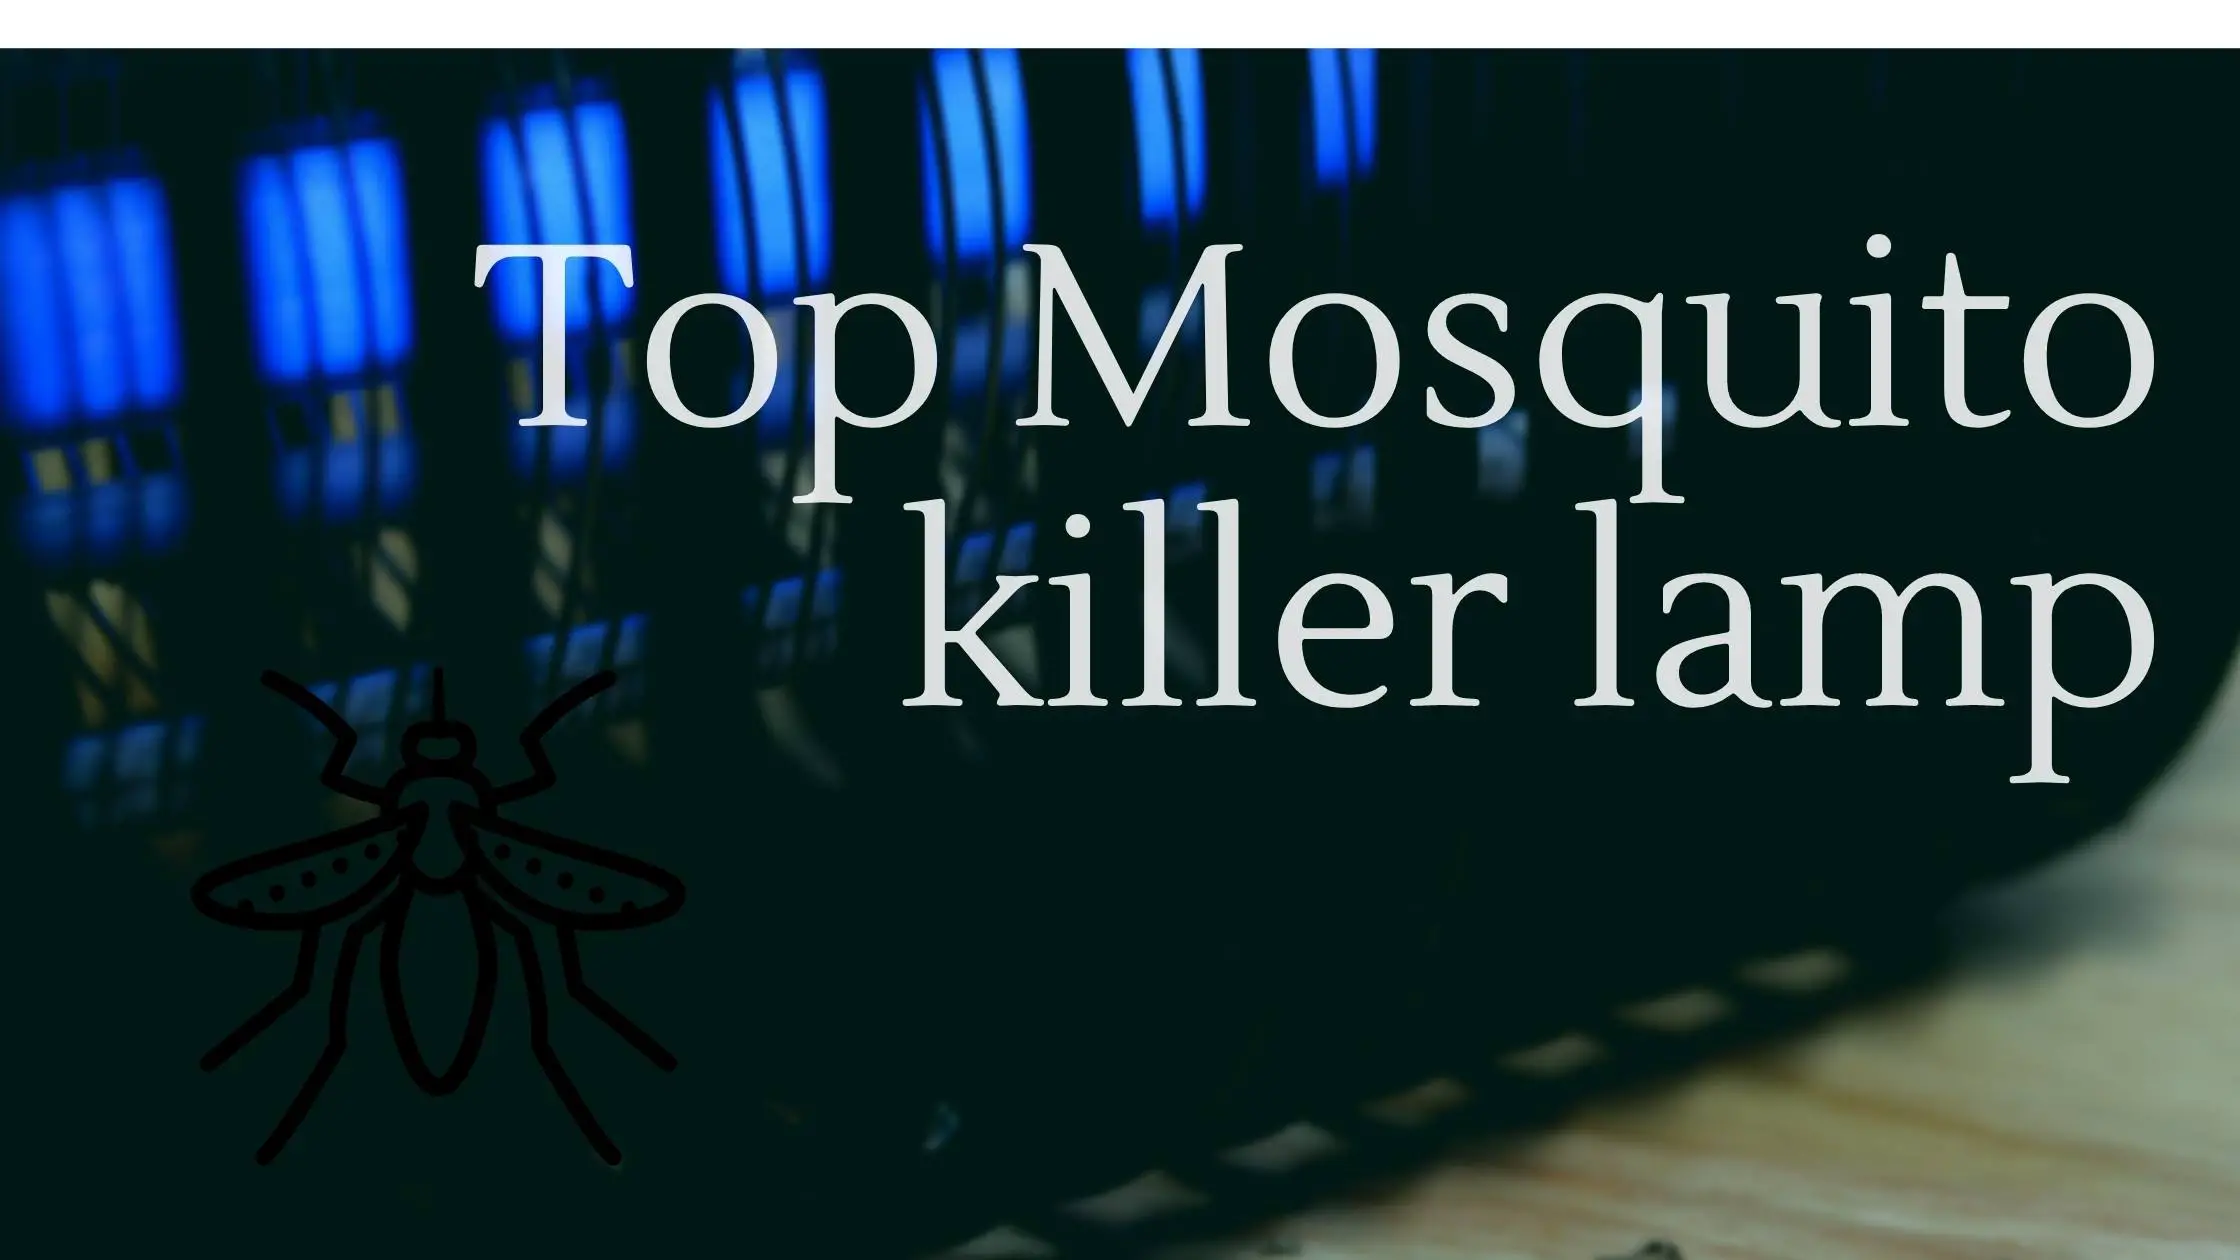 Top Mosquito killer lamp